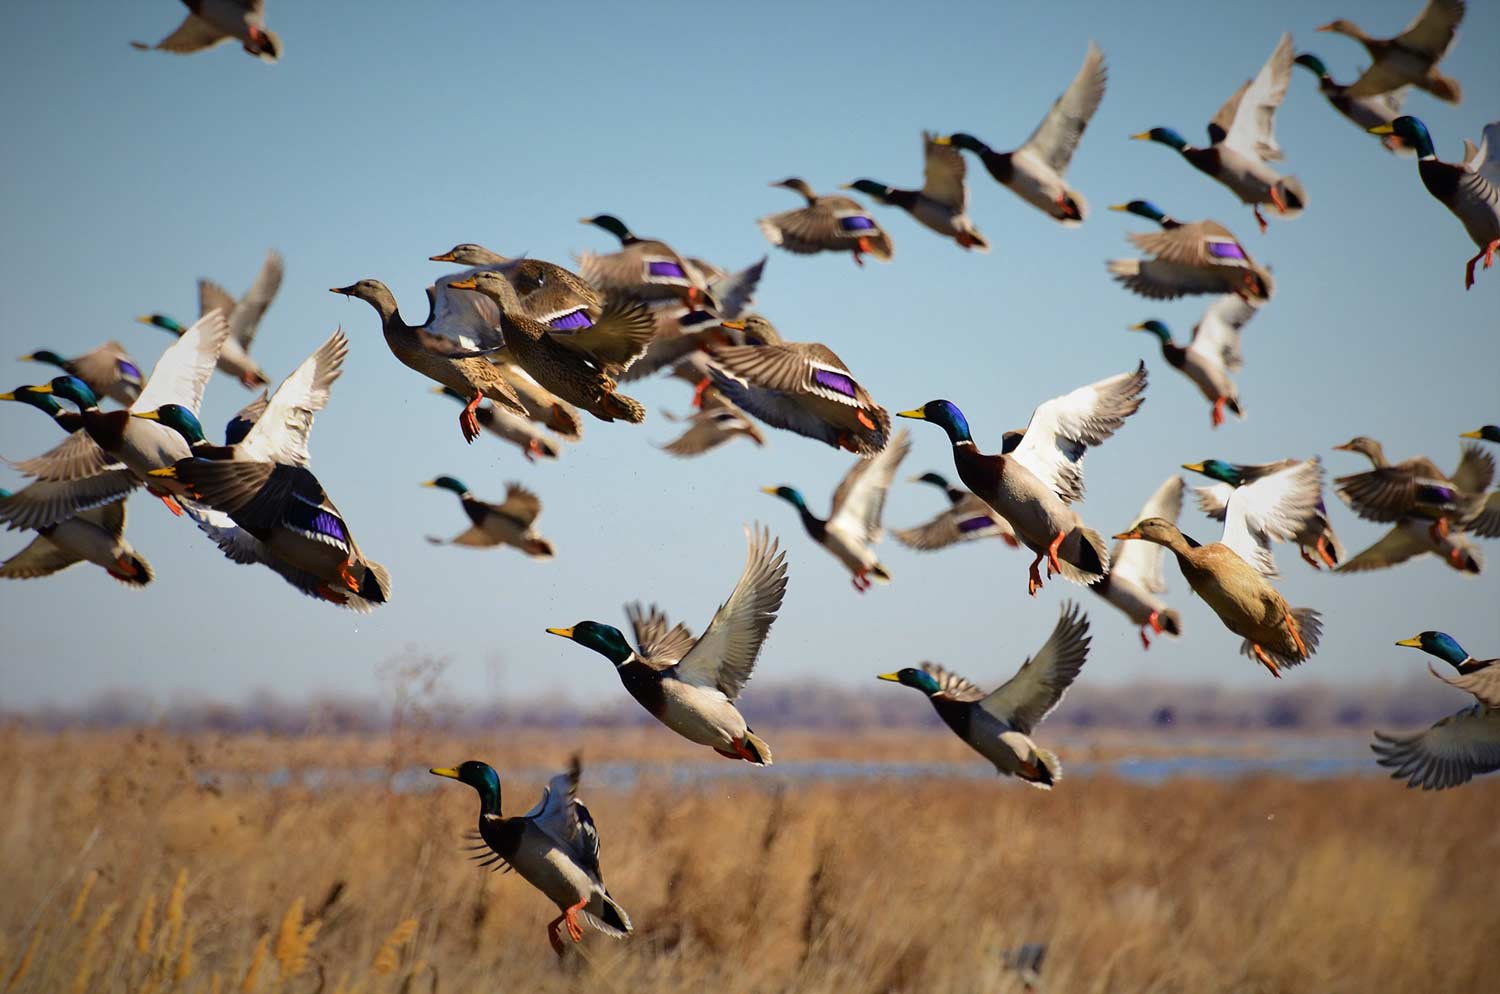 A flock of ducks taking flight.